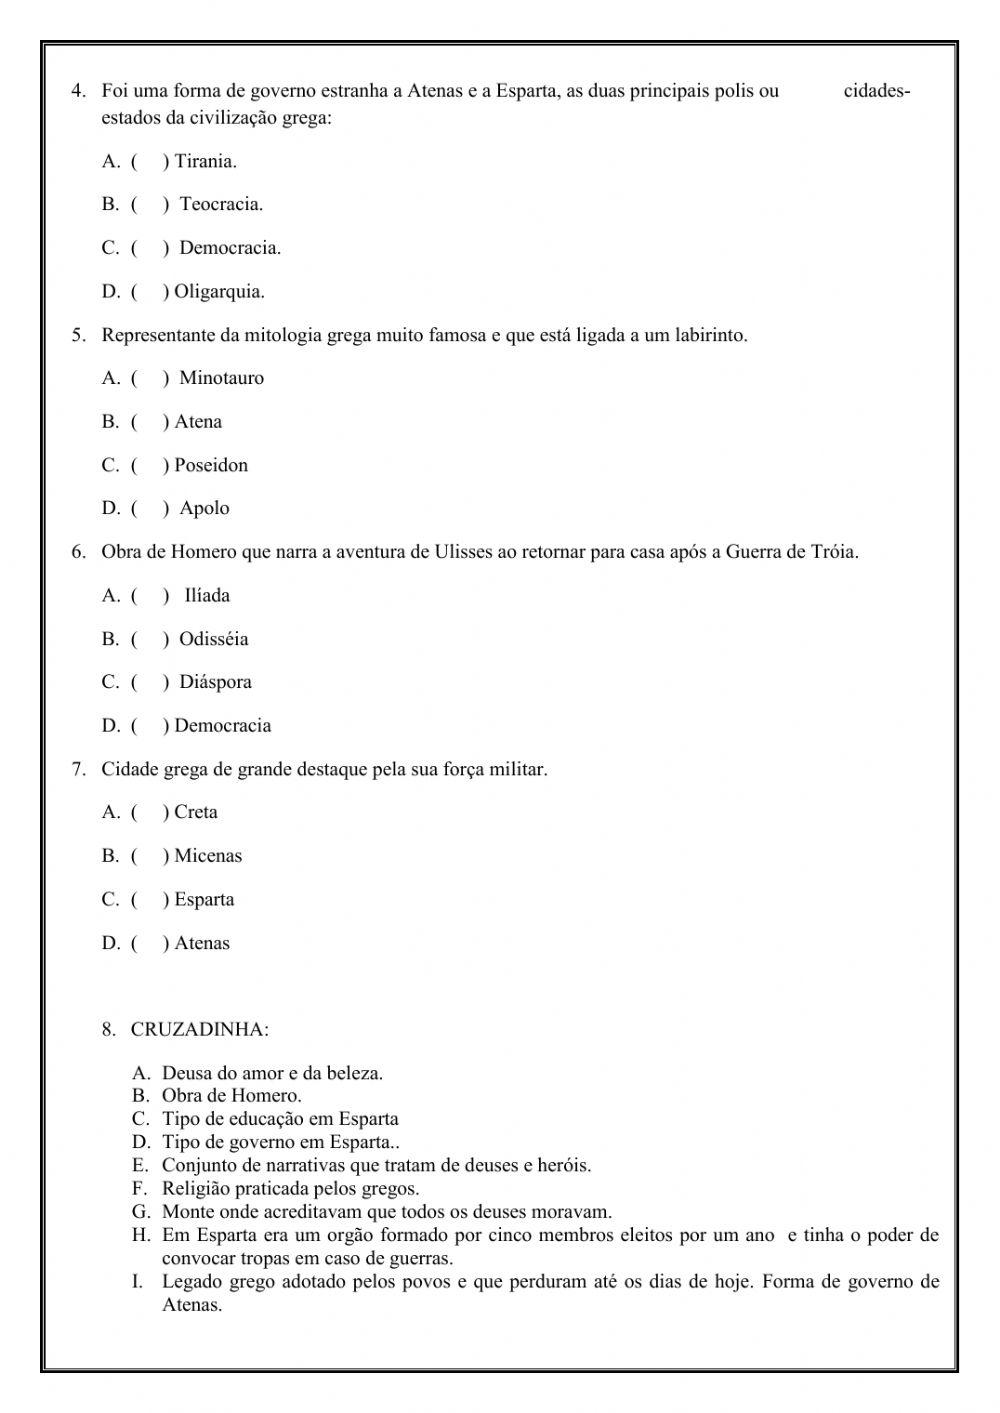 6 SÉRIE - cap 10 - a grecia antiga - atividades complementares (1), PDF, Esparta